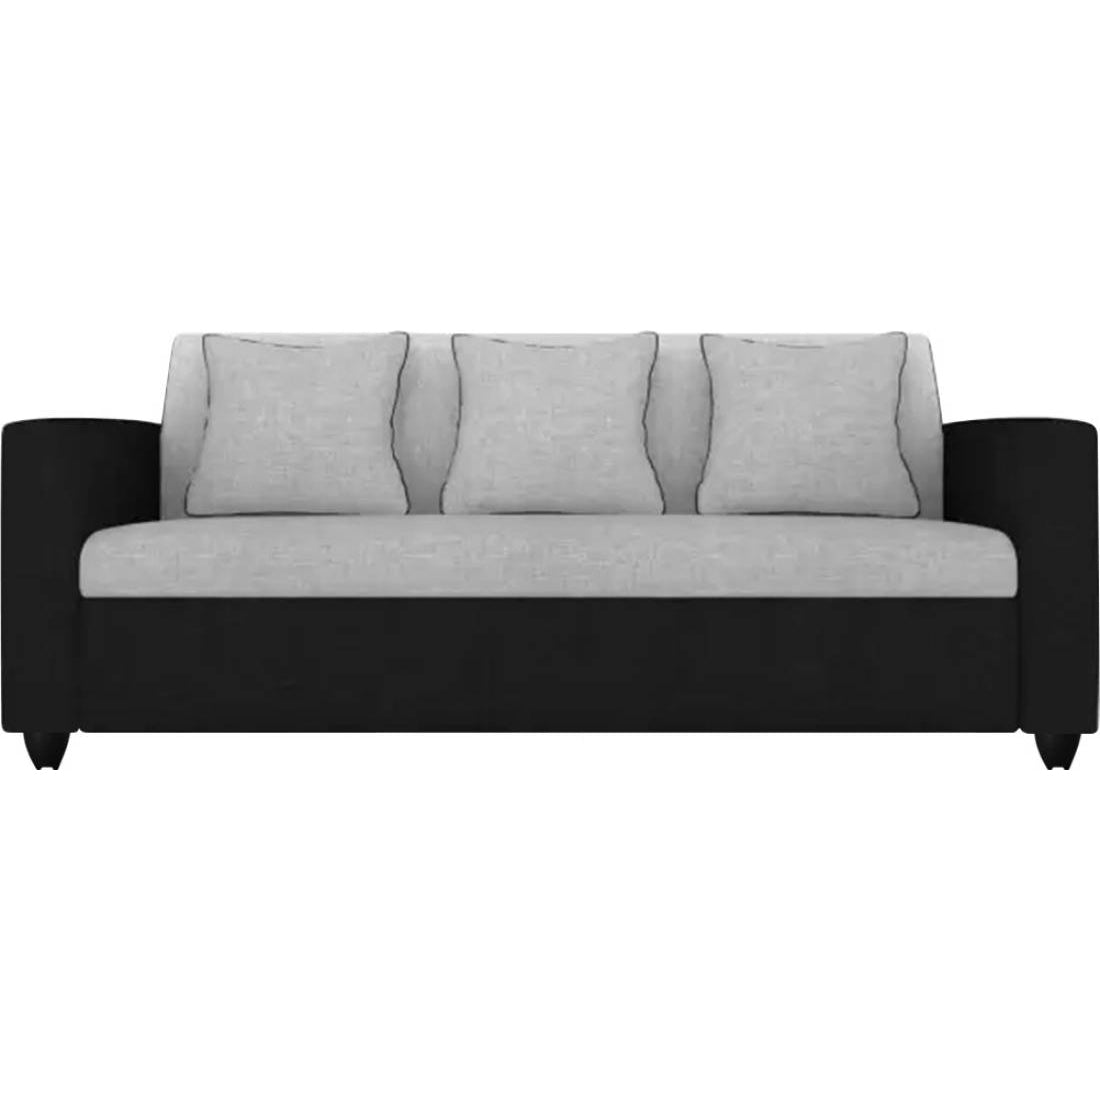 Torque India Robin 3 Seater Fabric Sofa With Cushion (Grey - Black) - TorqueIndia